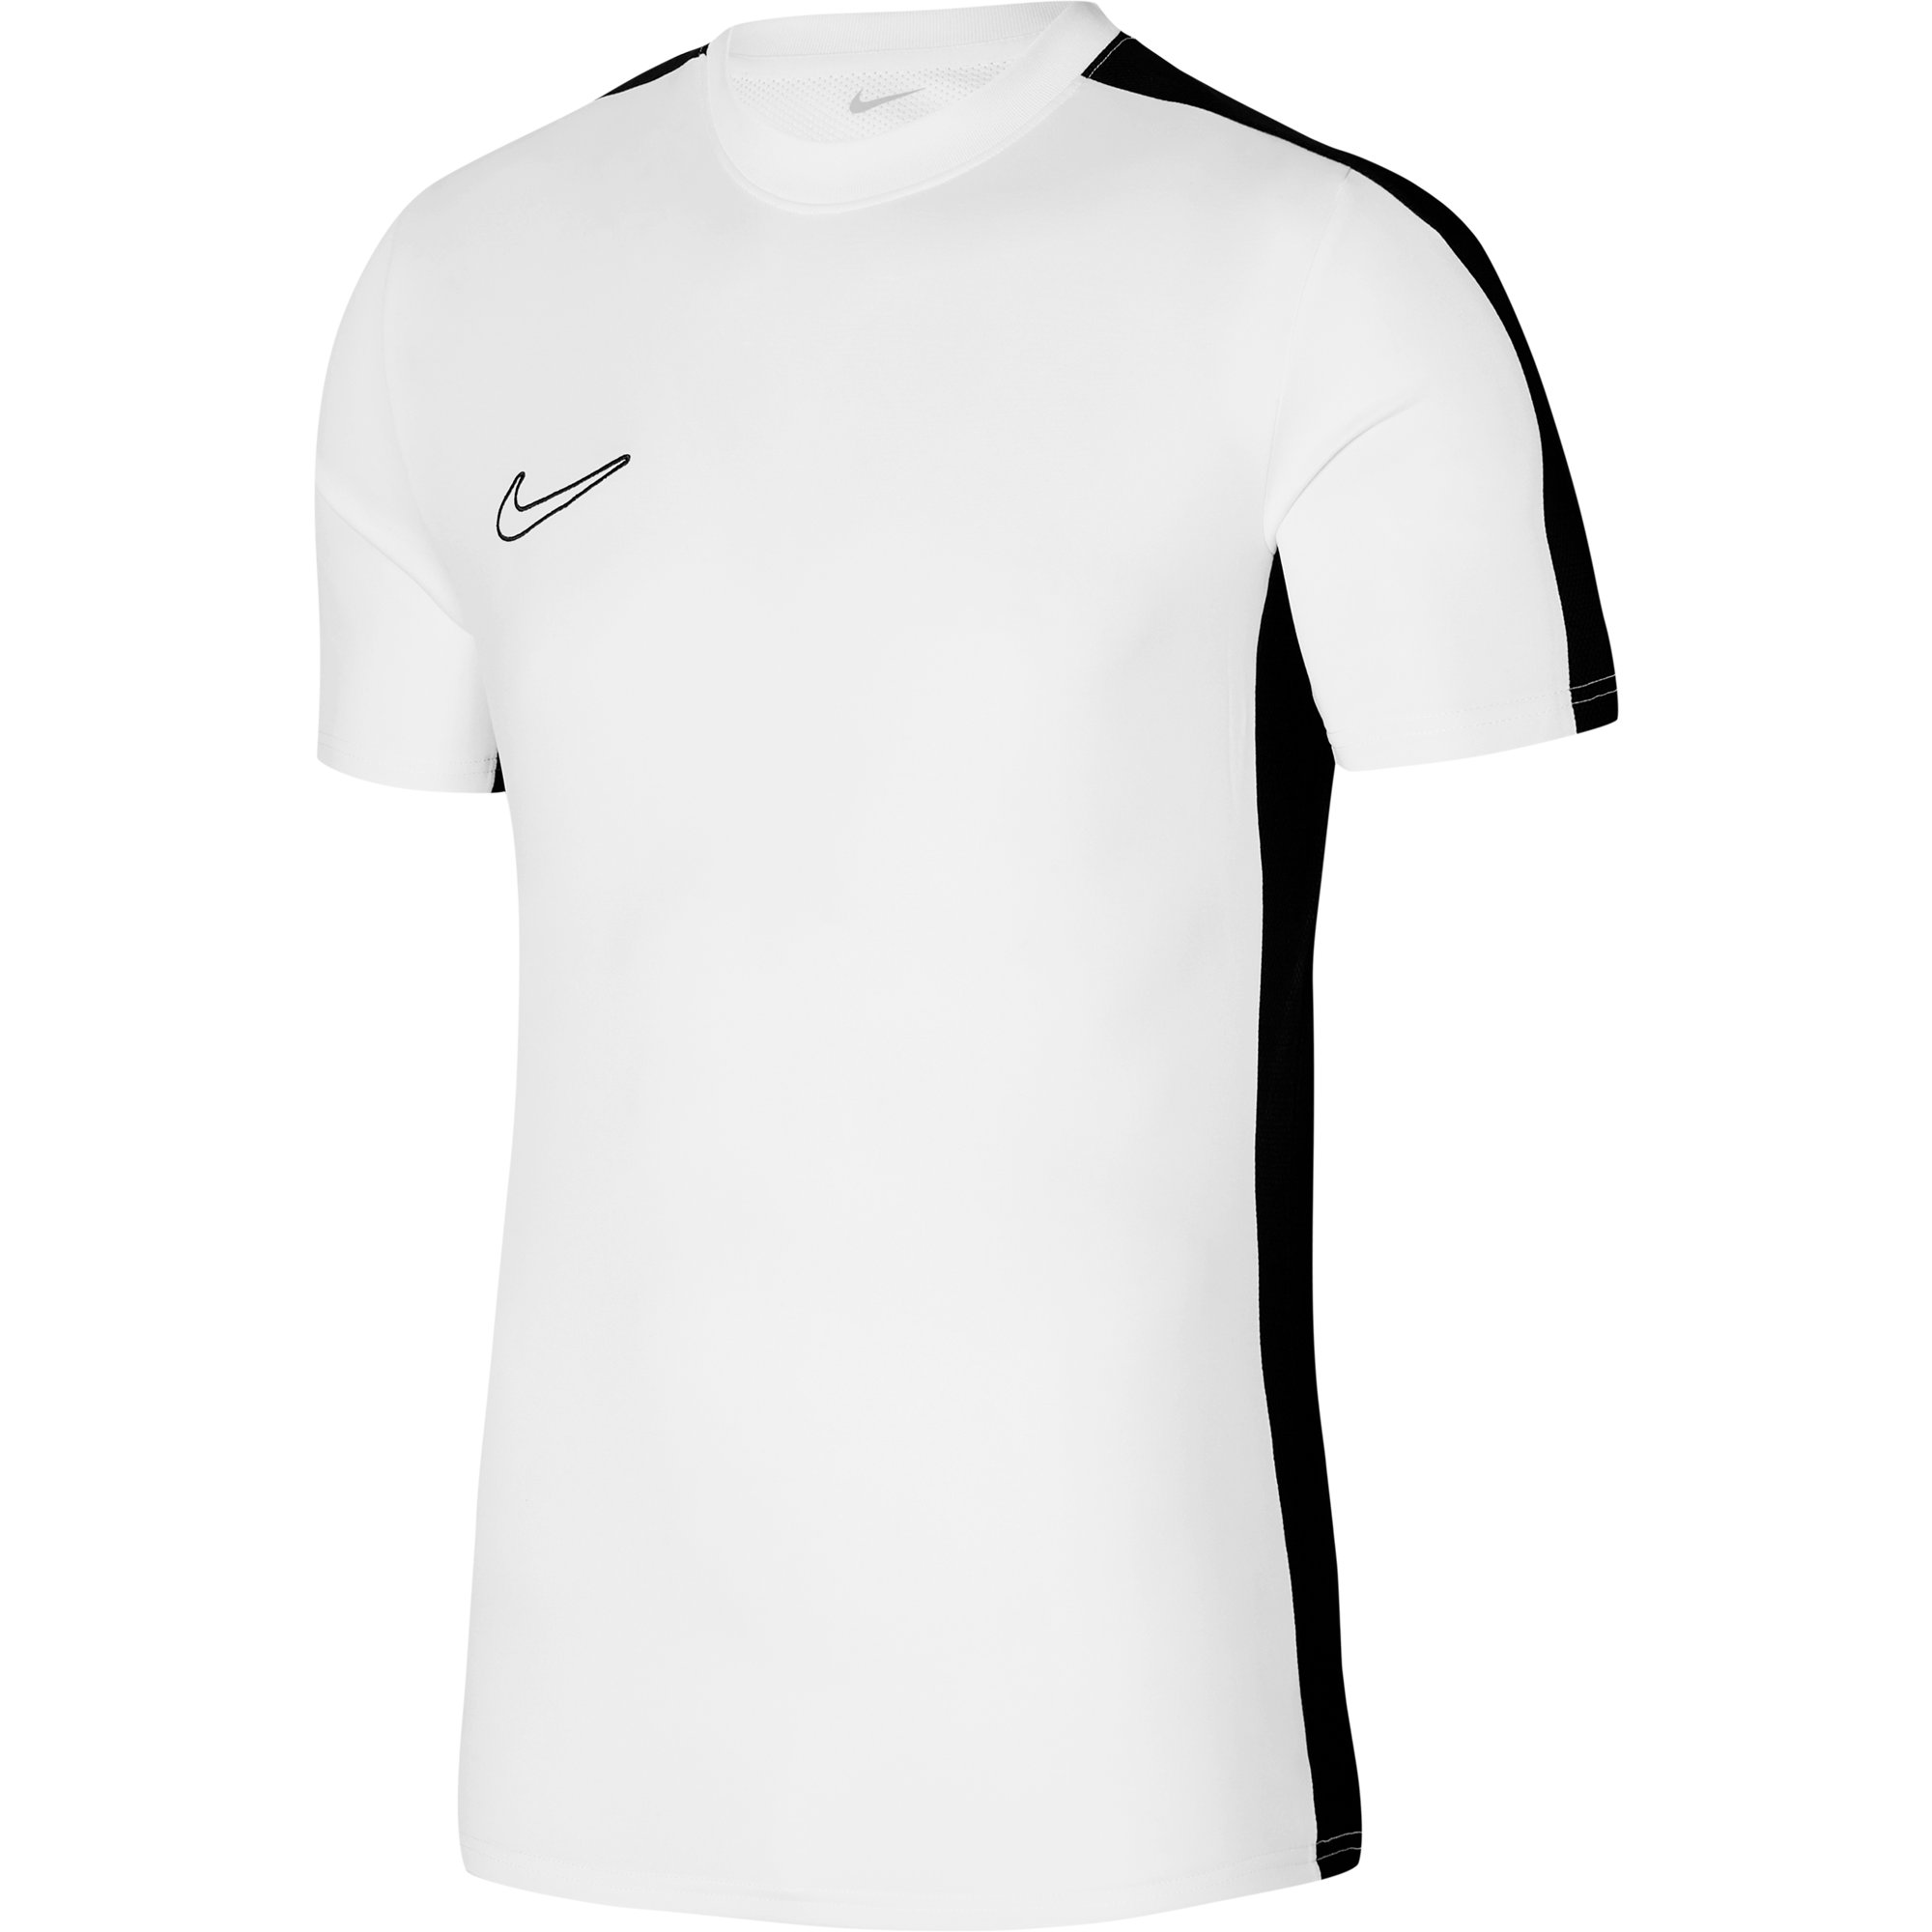 Nike Dri FIT Short Sleeve Shirt in White/Black/Black